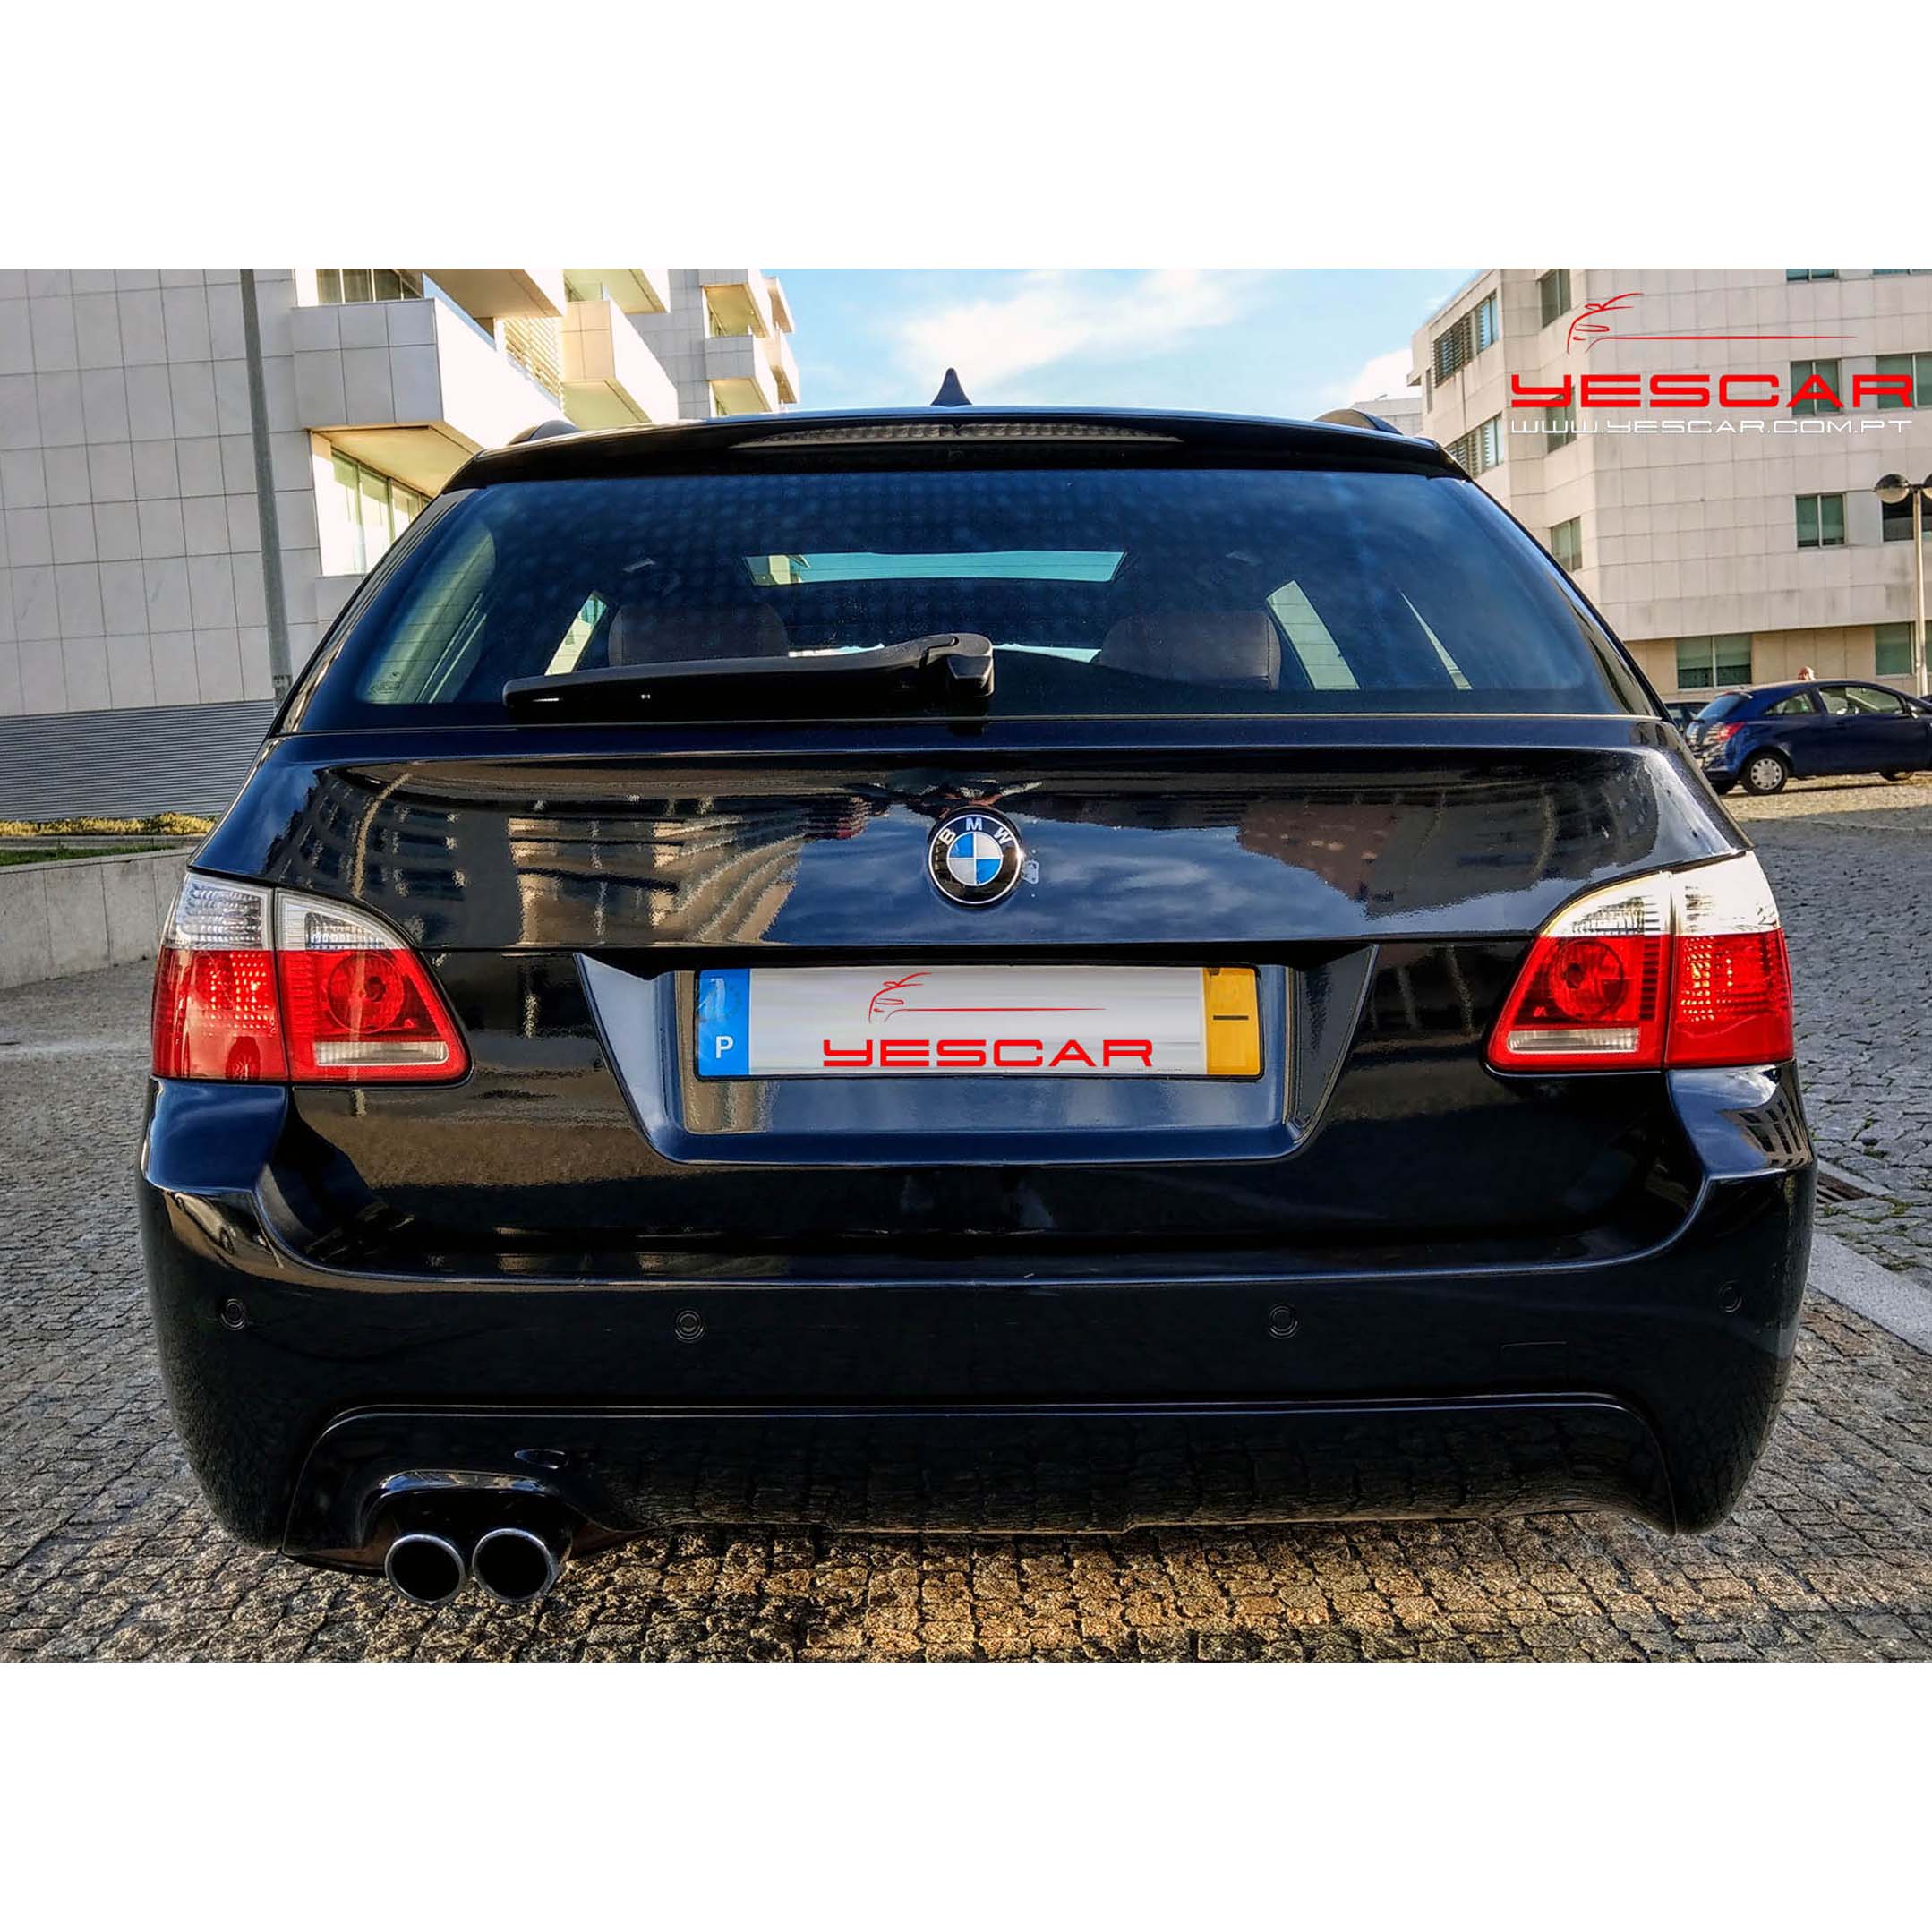 YESCAR_BMW_530_Tdi_Touring q (15)